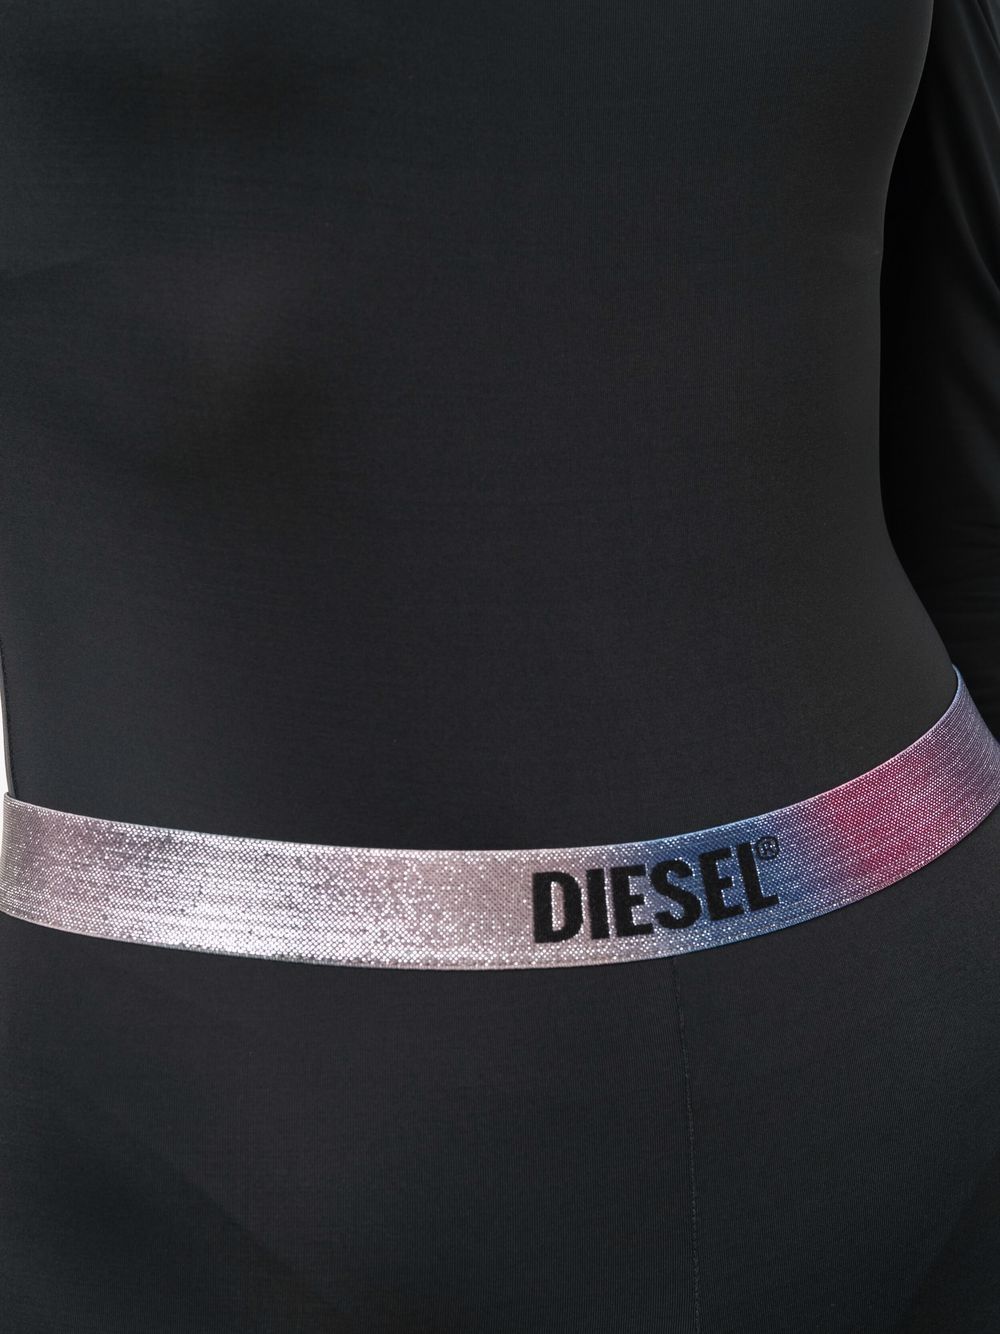 фото Diesel легинсы с логотипом